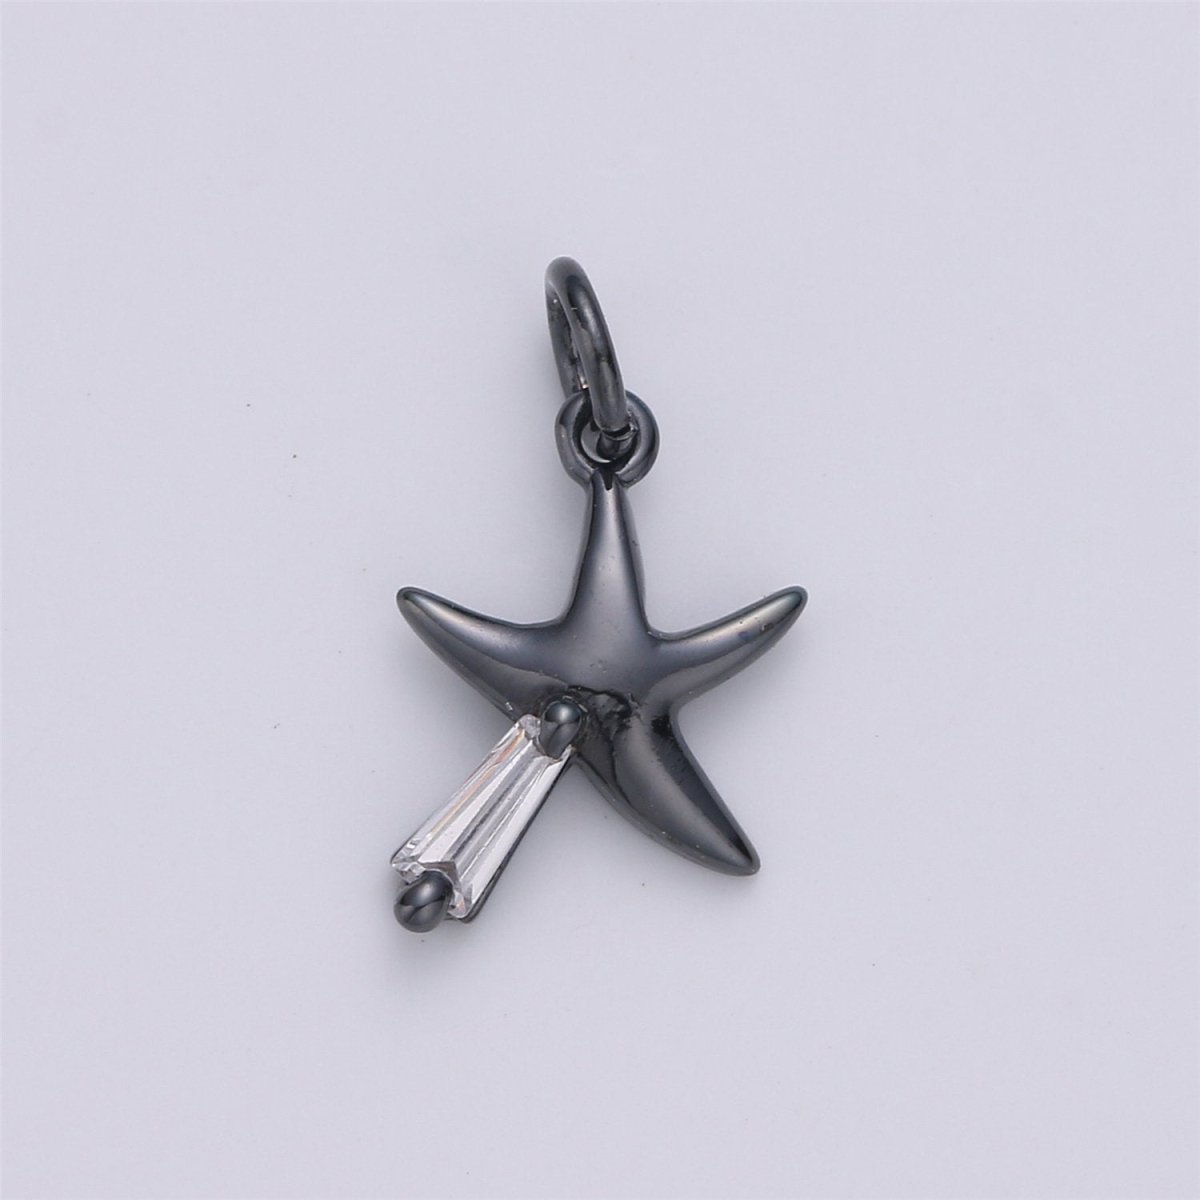 Dainty 24K Gold Filled Star charm 14x9mm CZ Cubic Black Silver Rose Gold Star Fish Pendant Celestial Jewelry Minimalist charm, D-003 TO D-006 - DLUXCA